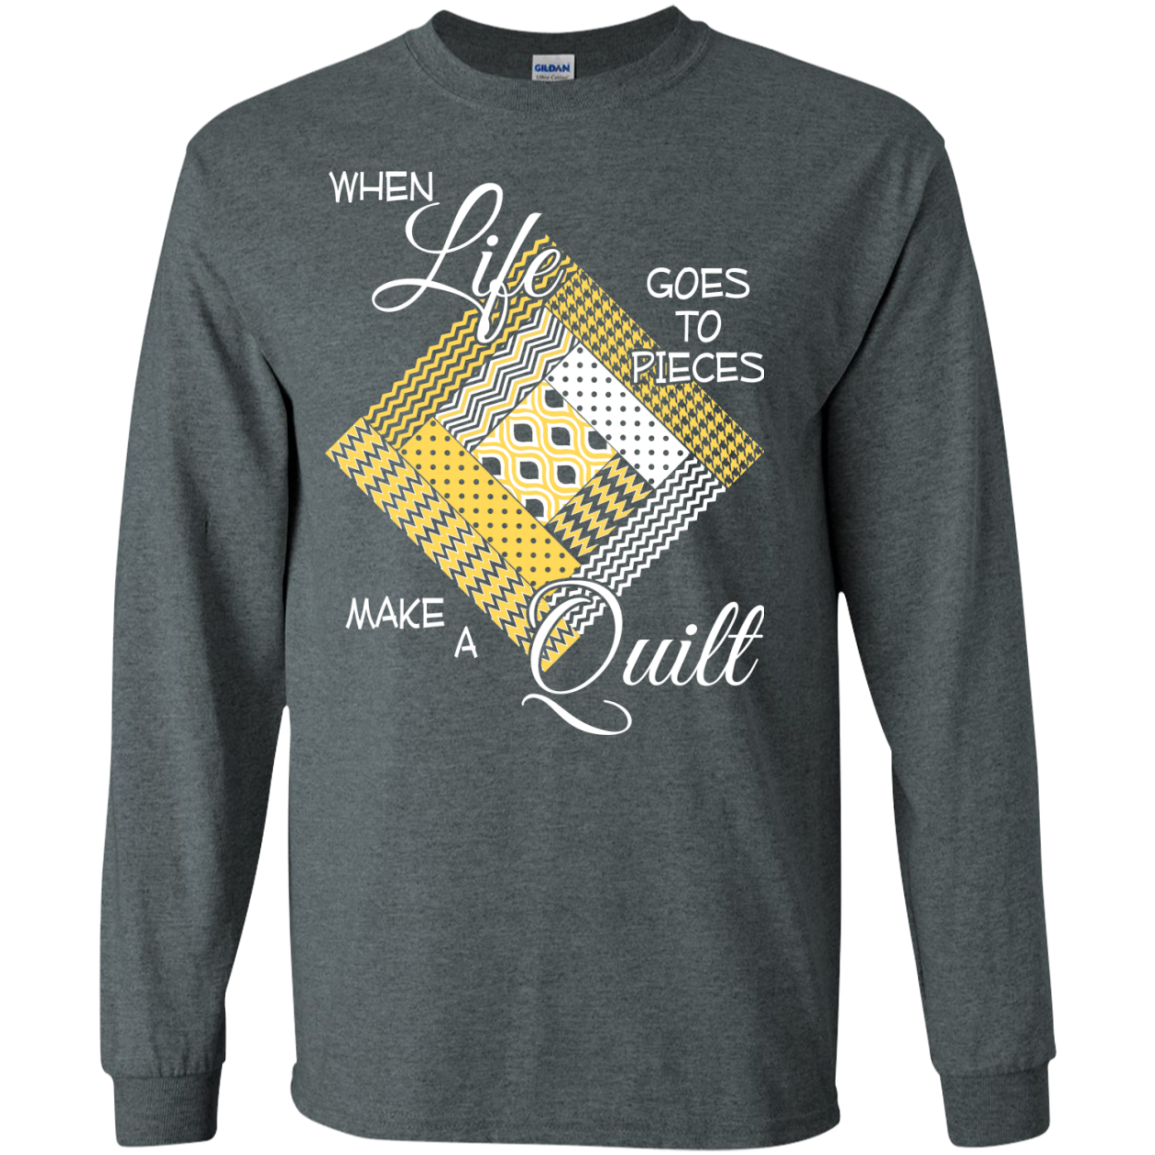 Make a Quilt (yellow) Long Sleeve Ultra Cotton T-Shirt - Crafter4Life - 5